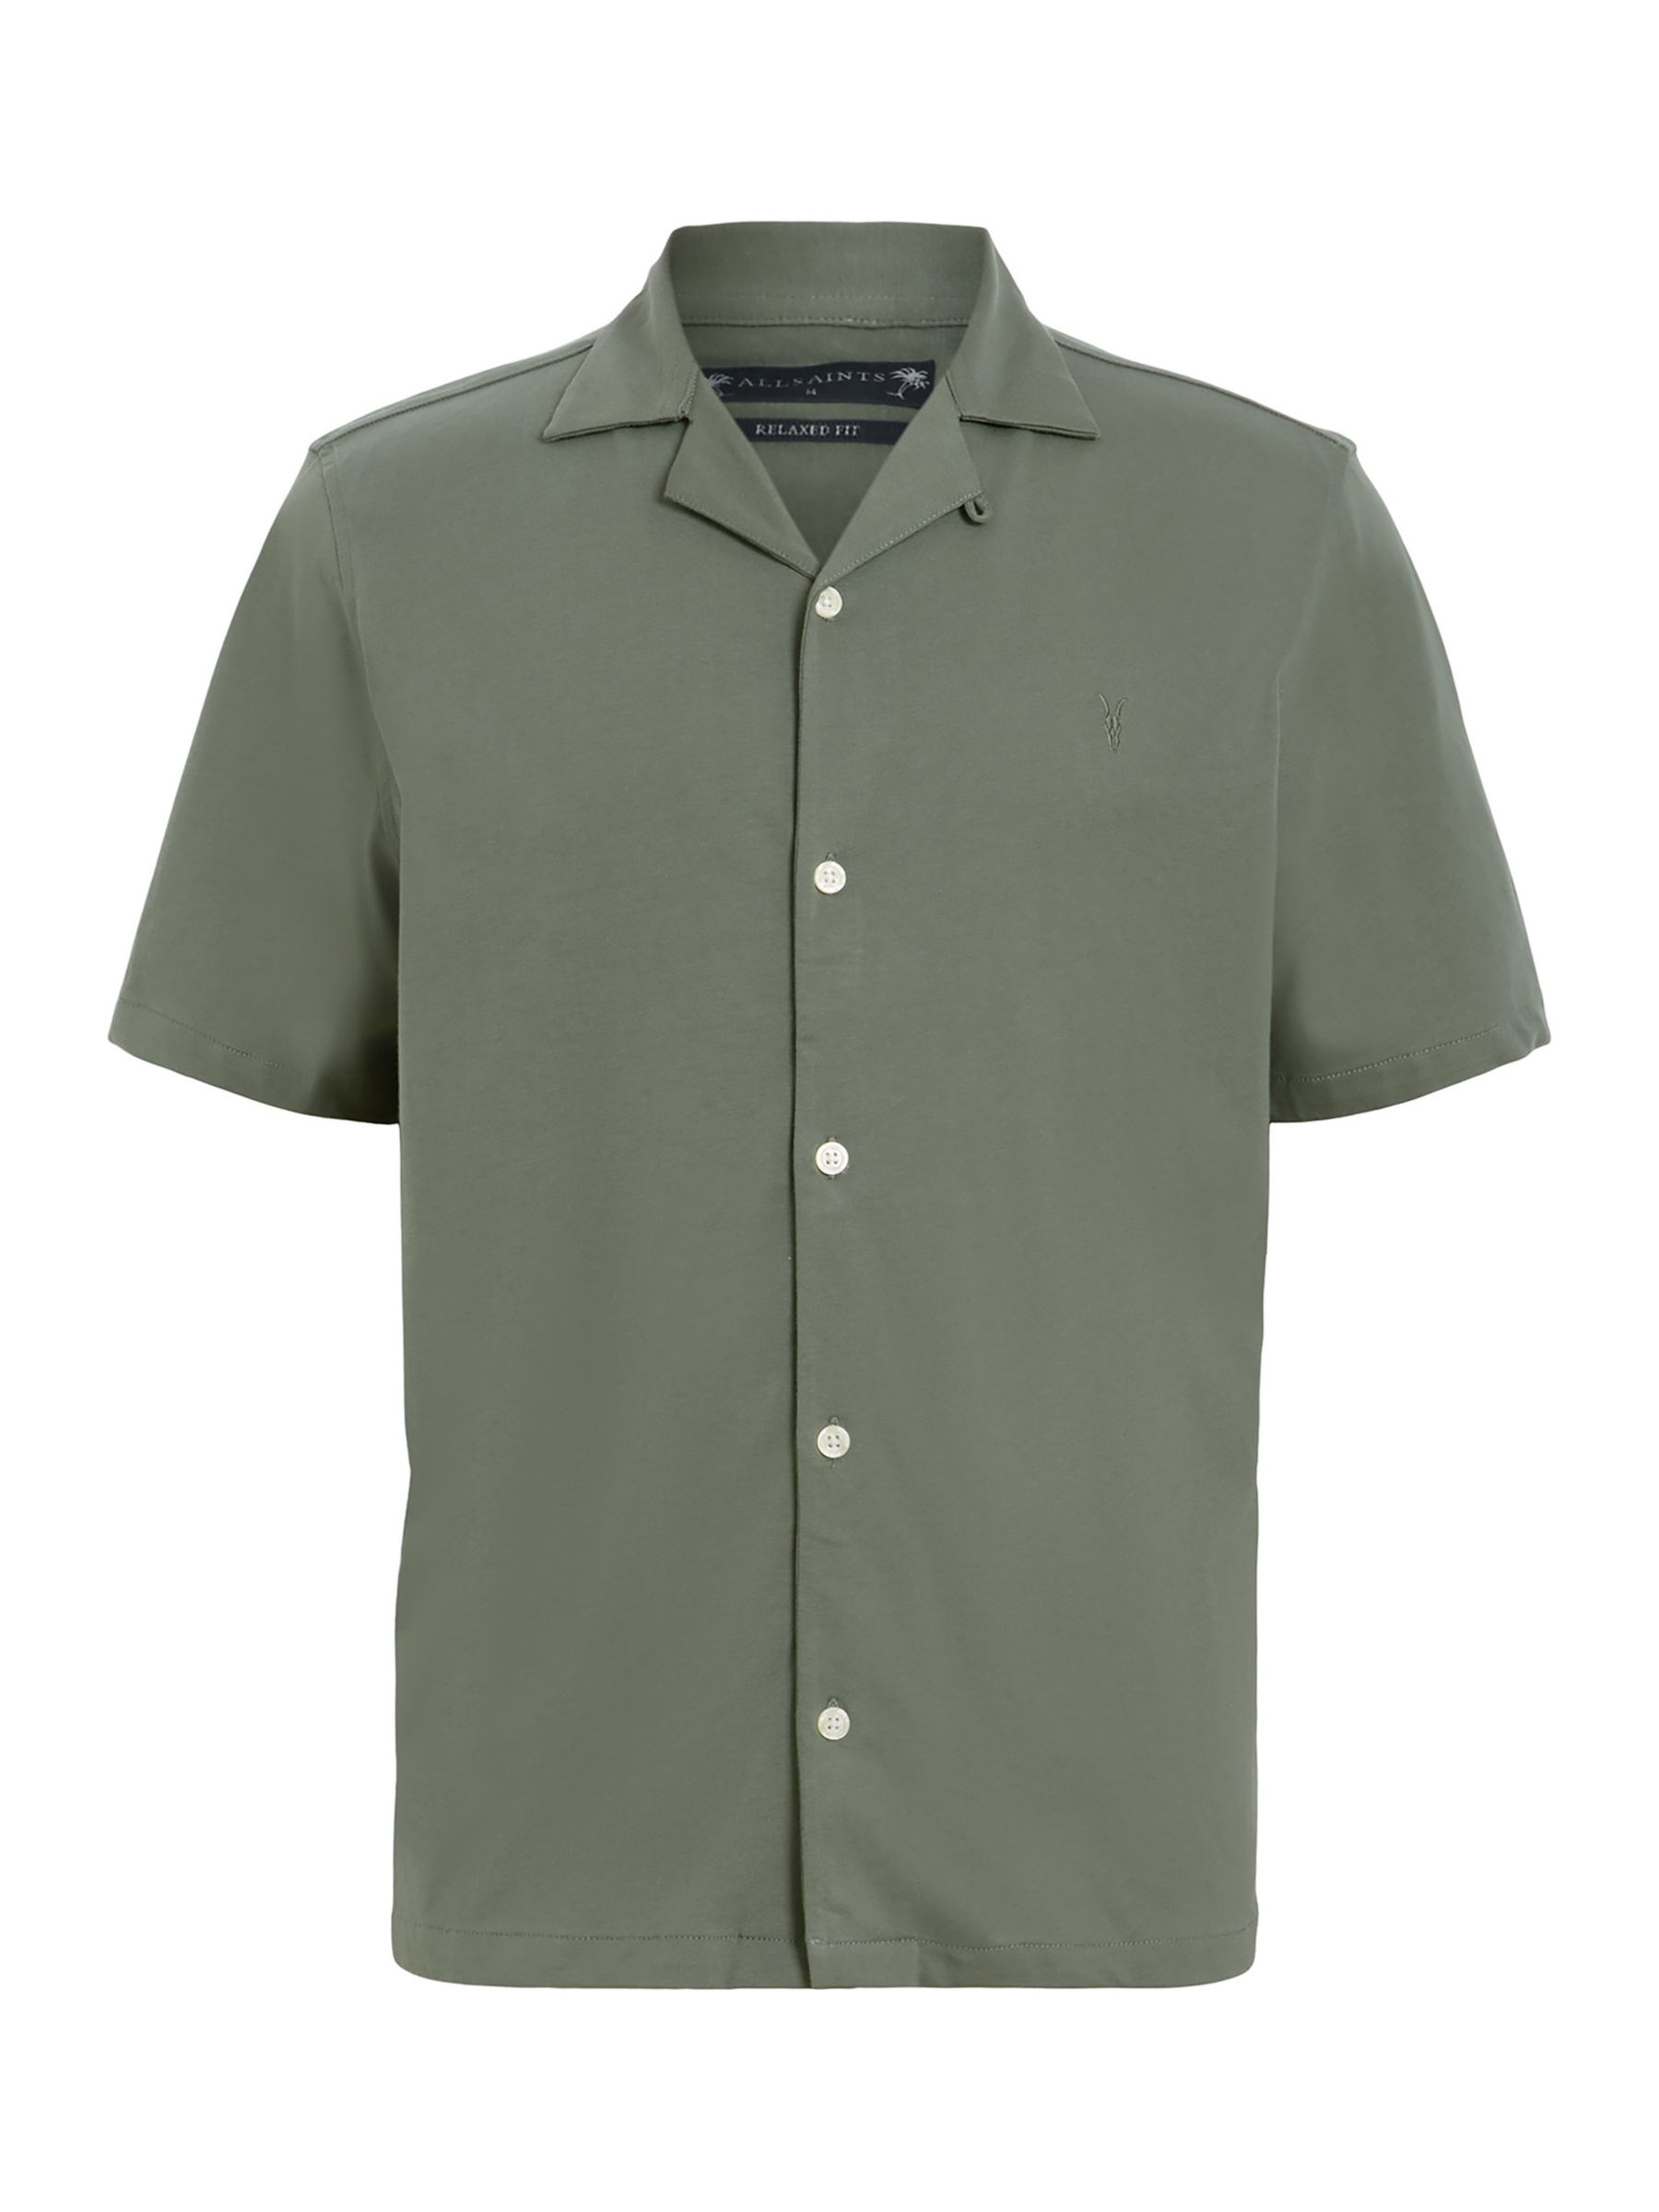 AllSaints Hudson Short Sleeve Shirt, Green, L